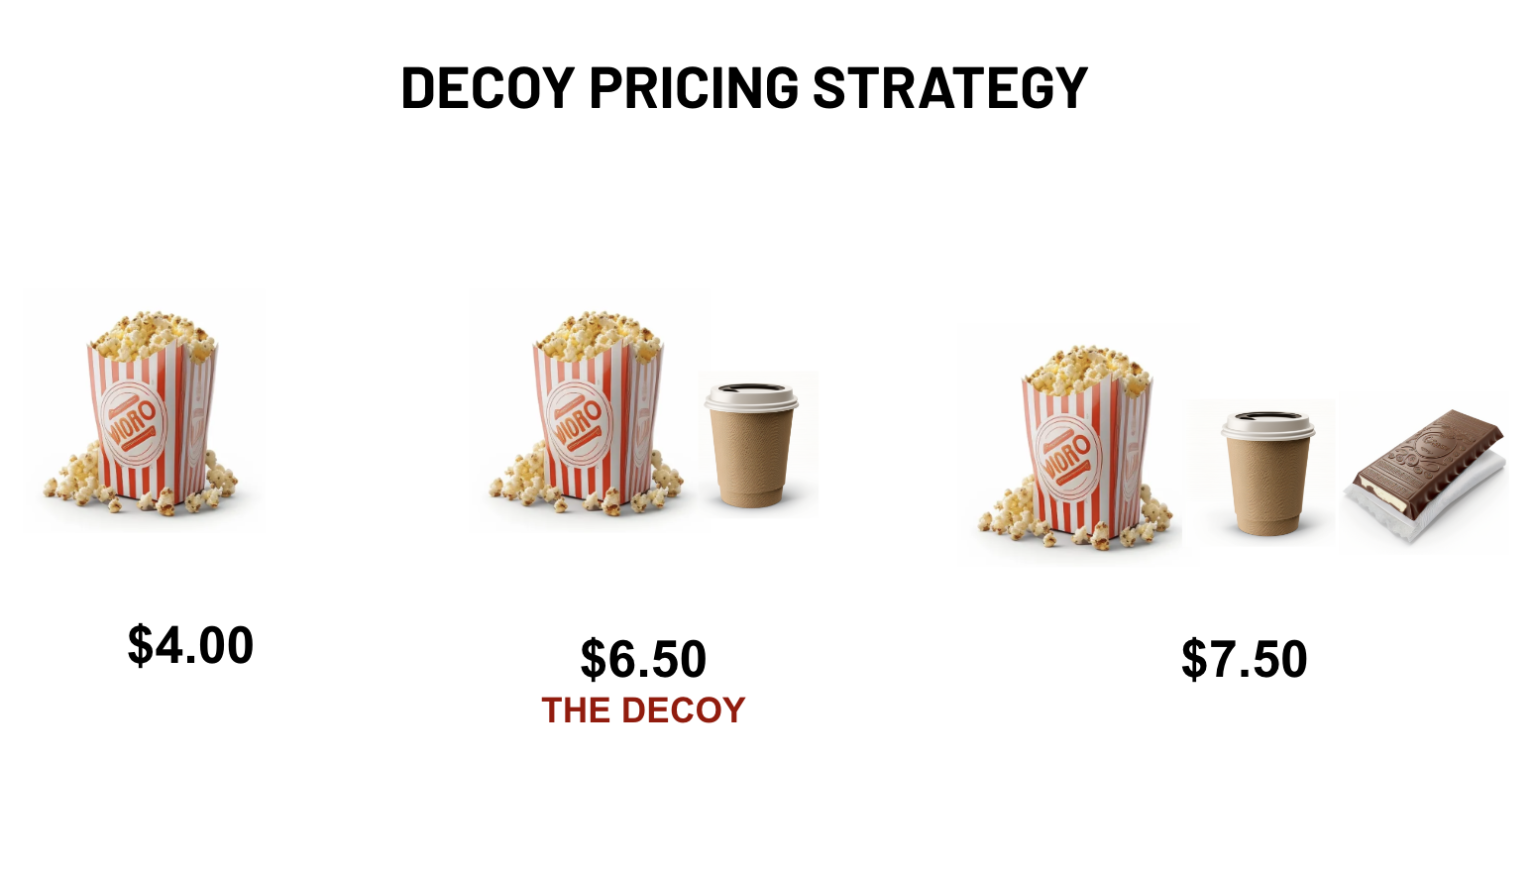 Decoy pricing